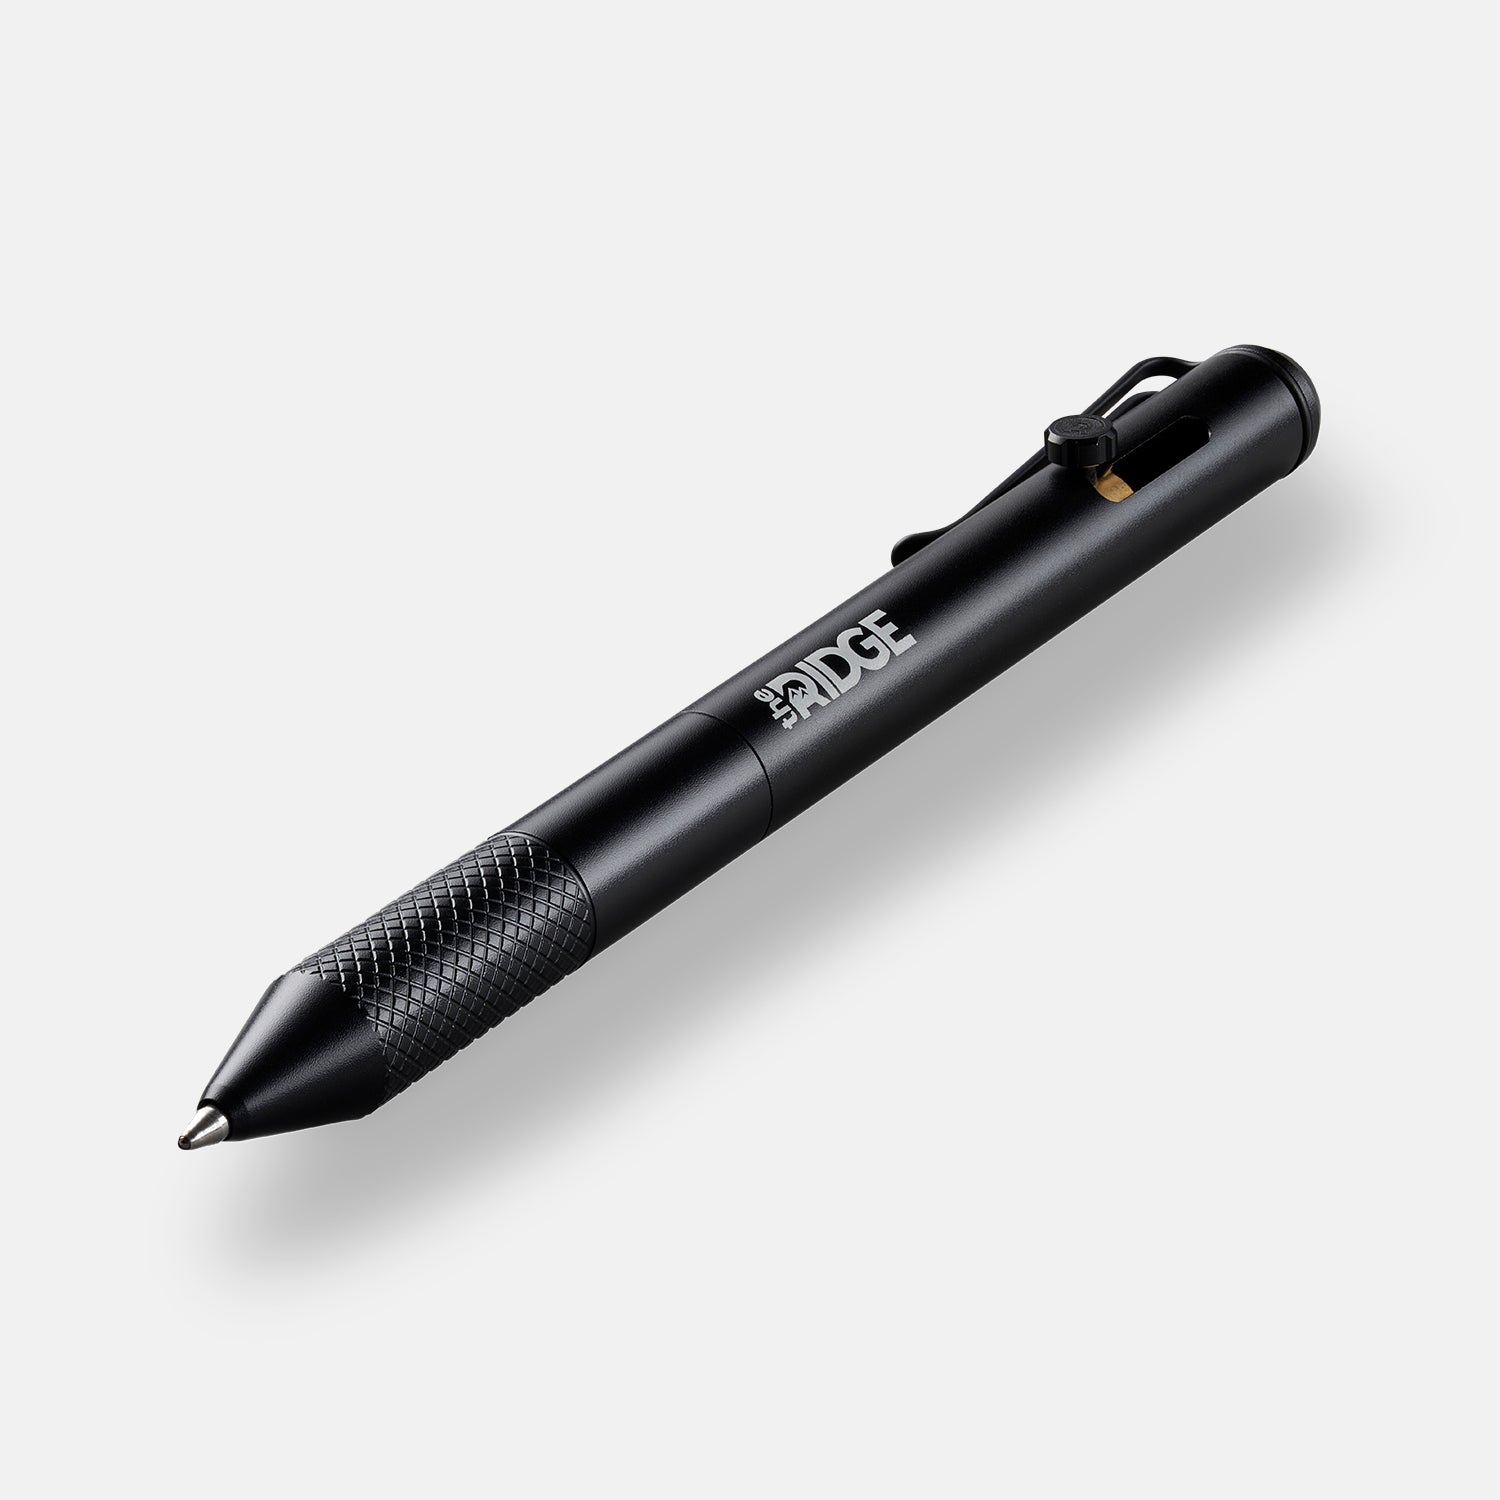  Extra Fine Point Writing Pens: 6 Black Ultra Thin